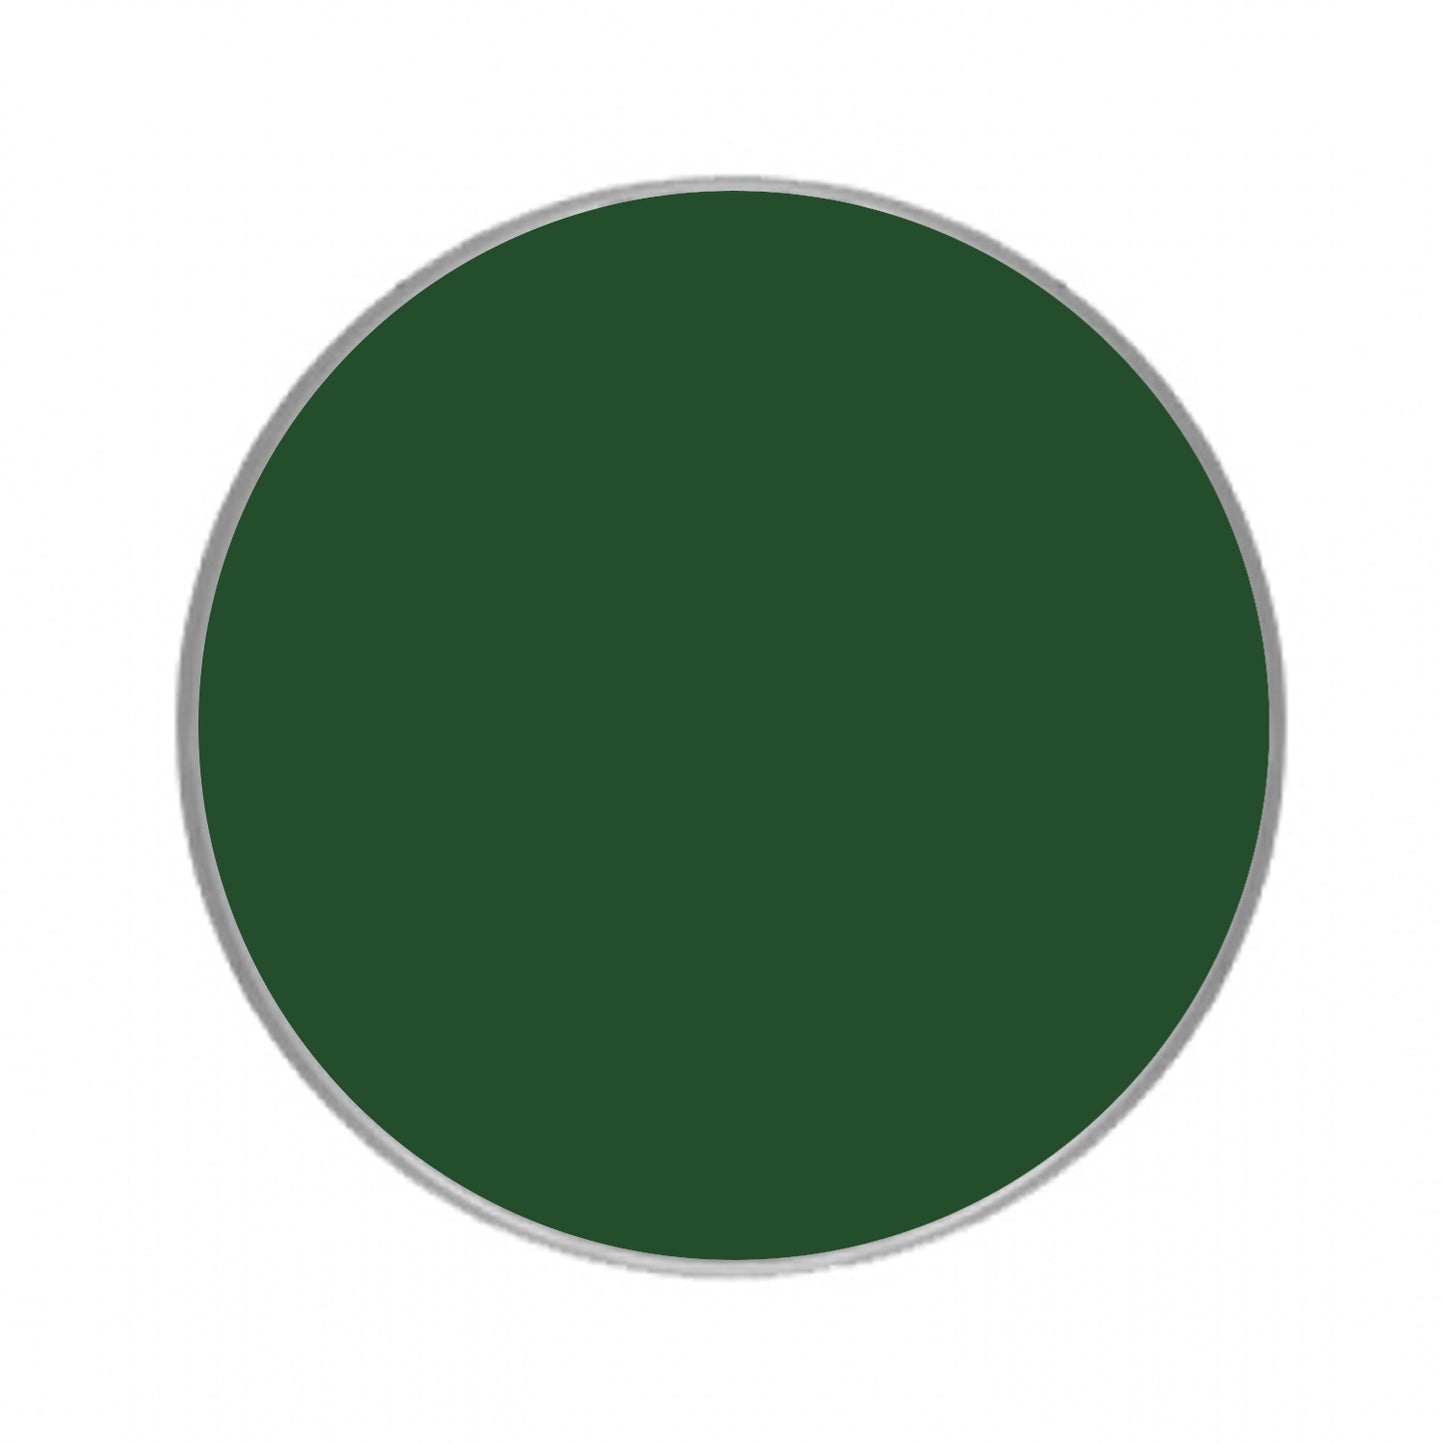 Kryolan Aquacolor Green Face Paints - Leaf Green 512 (30 ml)